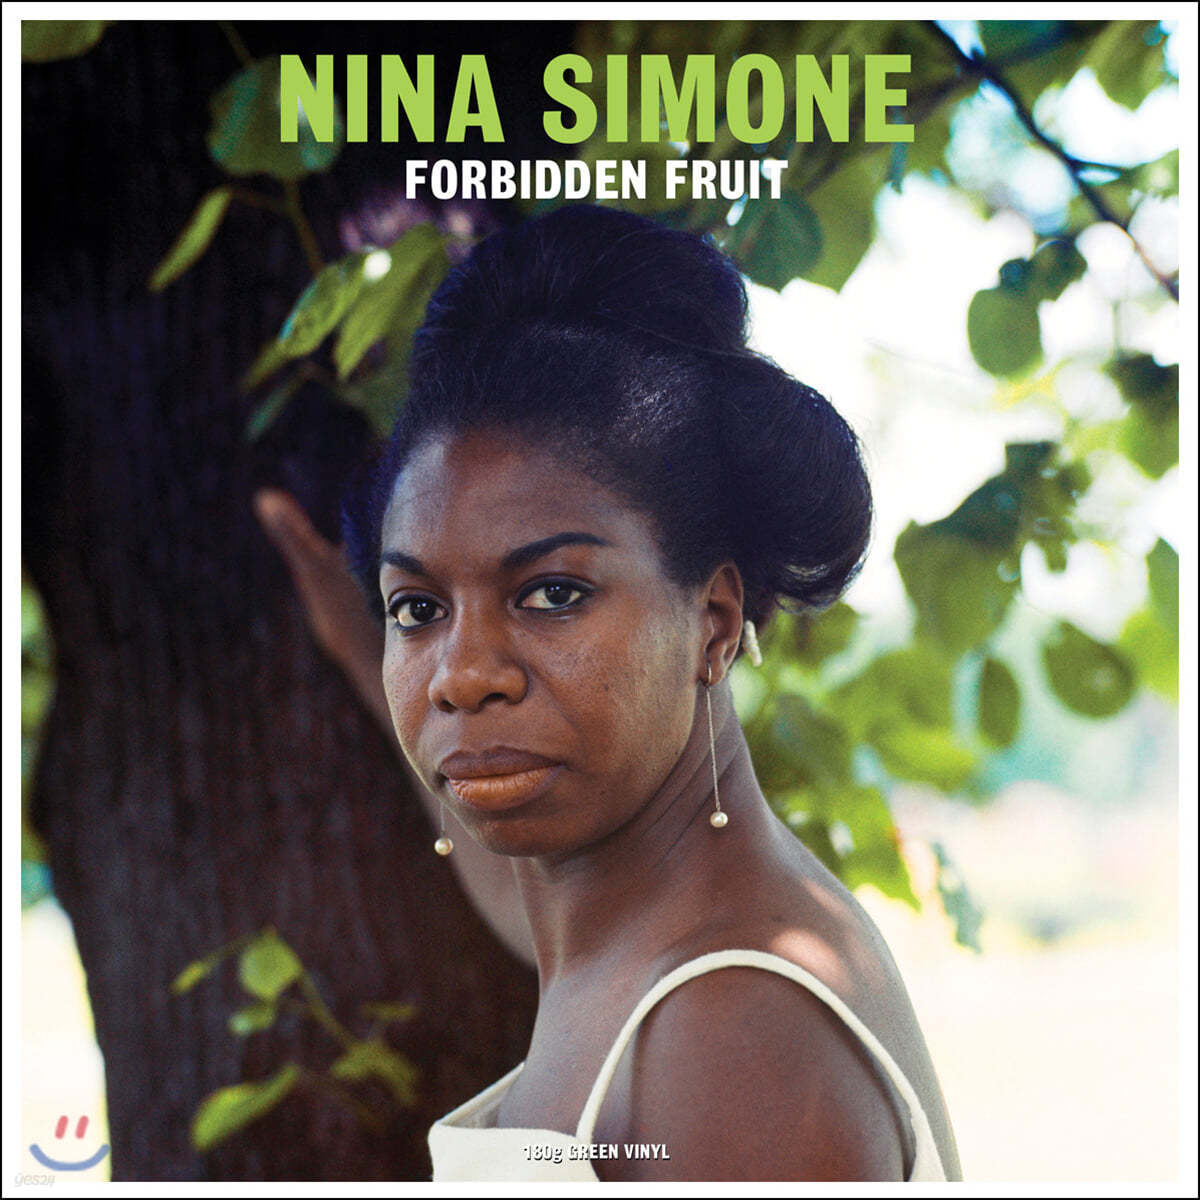 Nina Simone (니나 시몬) - Forbidden Fruit [그린 컬러 LP]